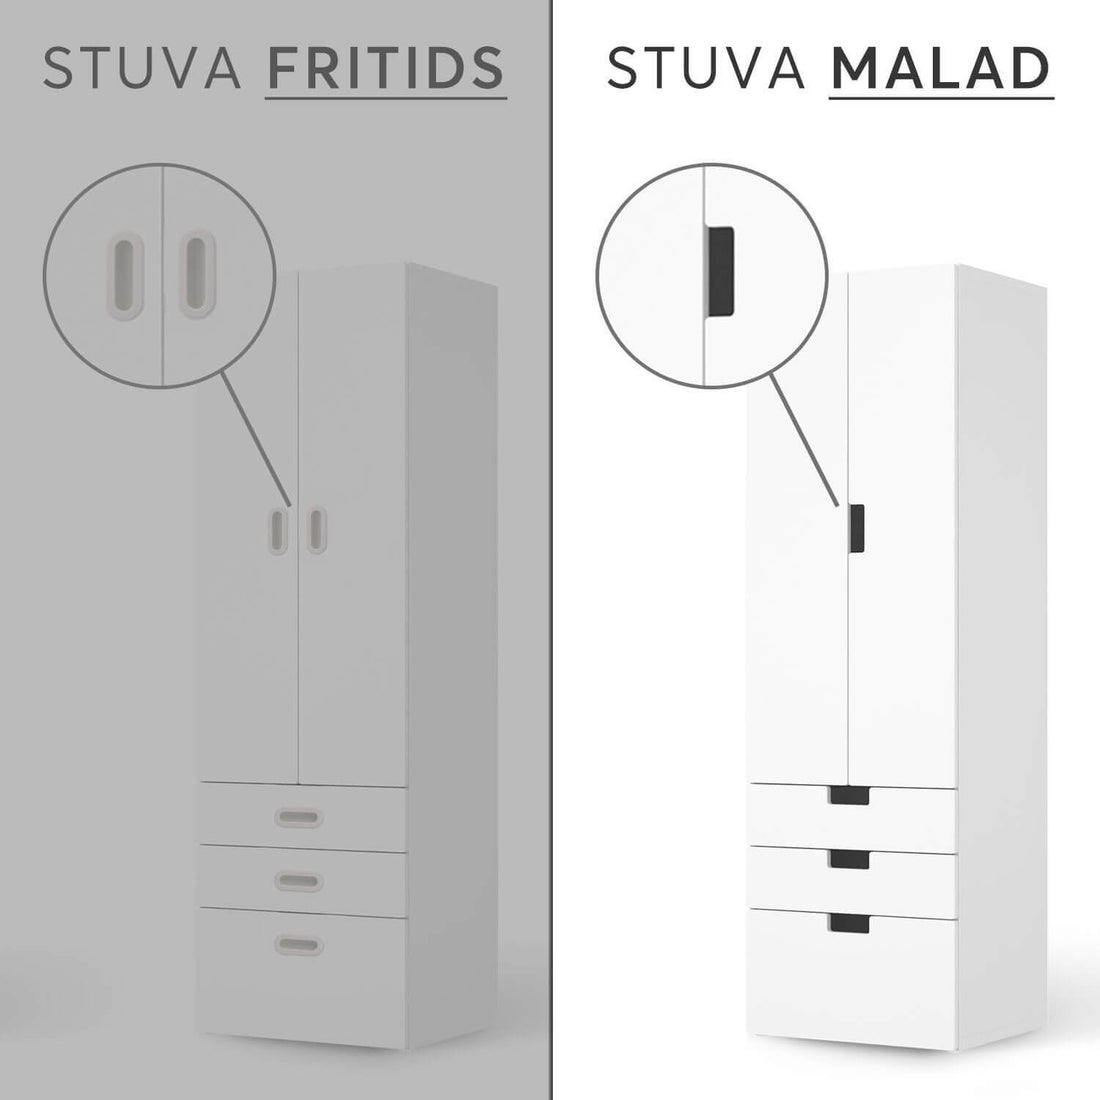 Vergleich IKEA Stuva Malad / Fritids - Blue Mandala